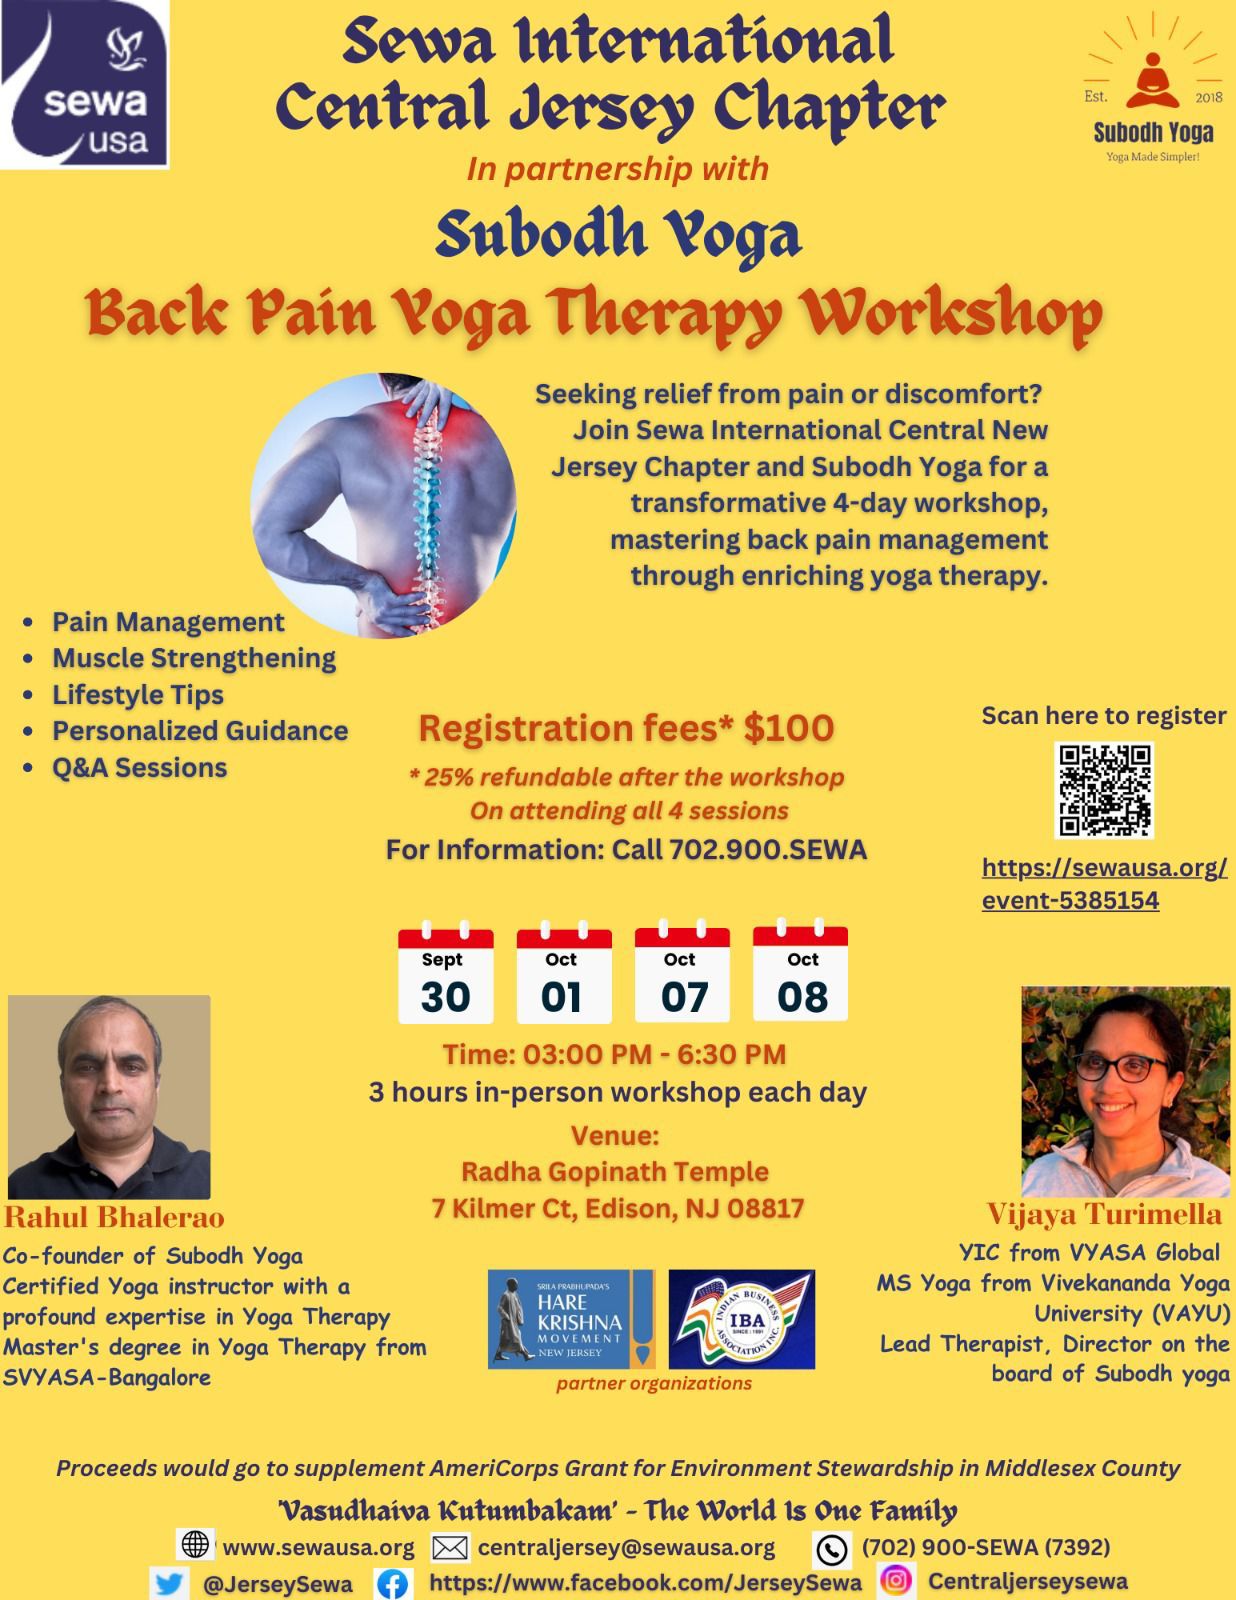 Back Pain Yoga